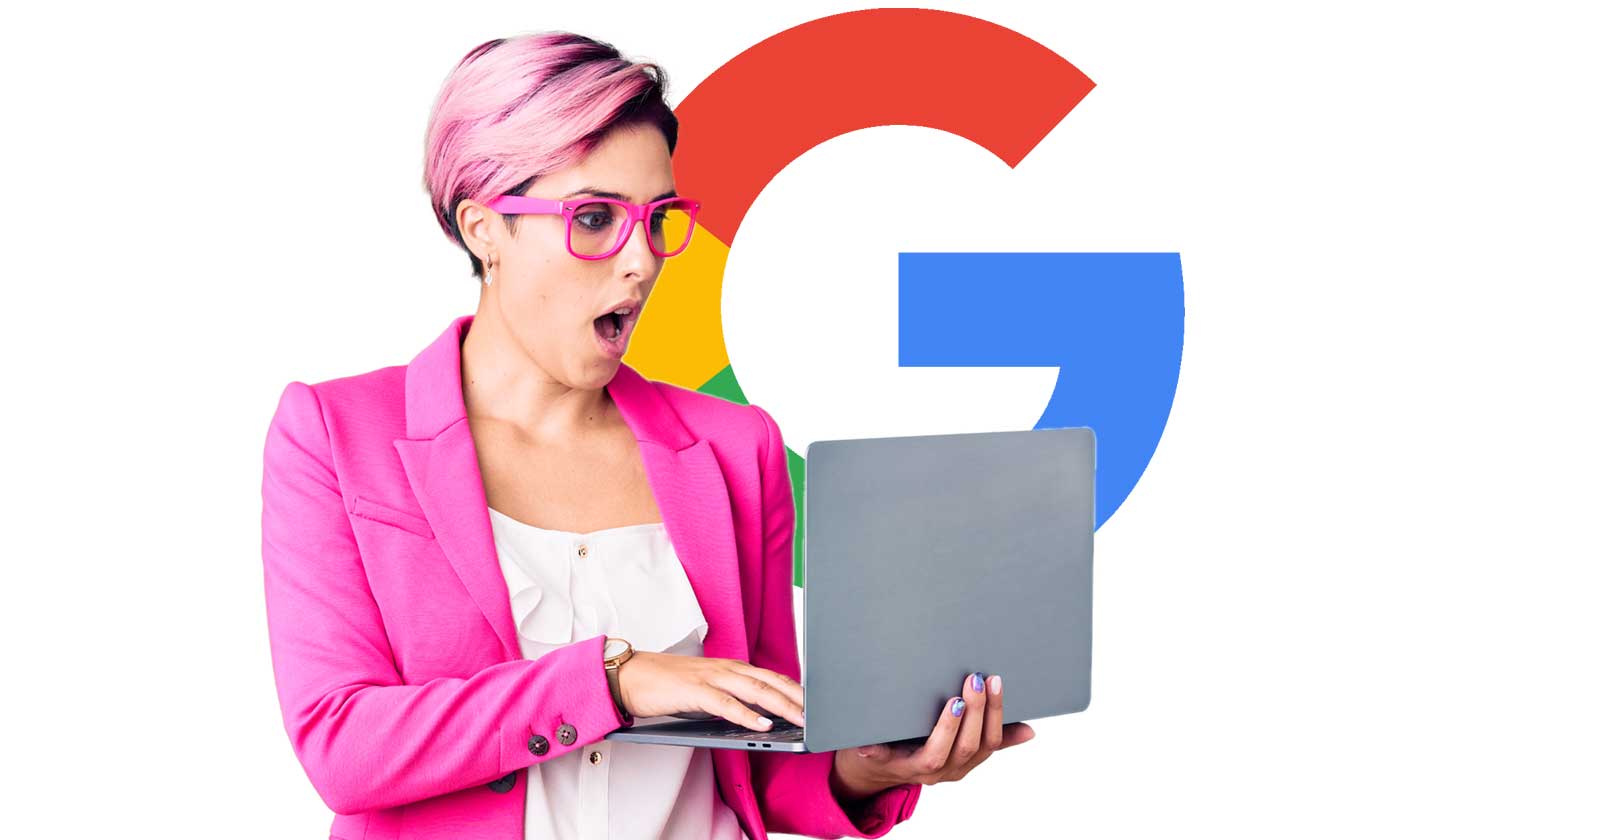 Main Article Image - Google Logo